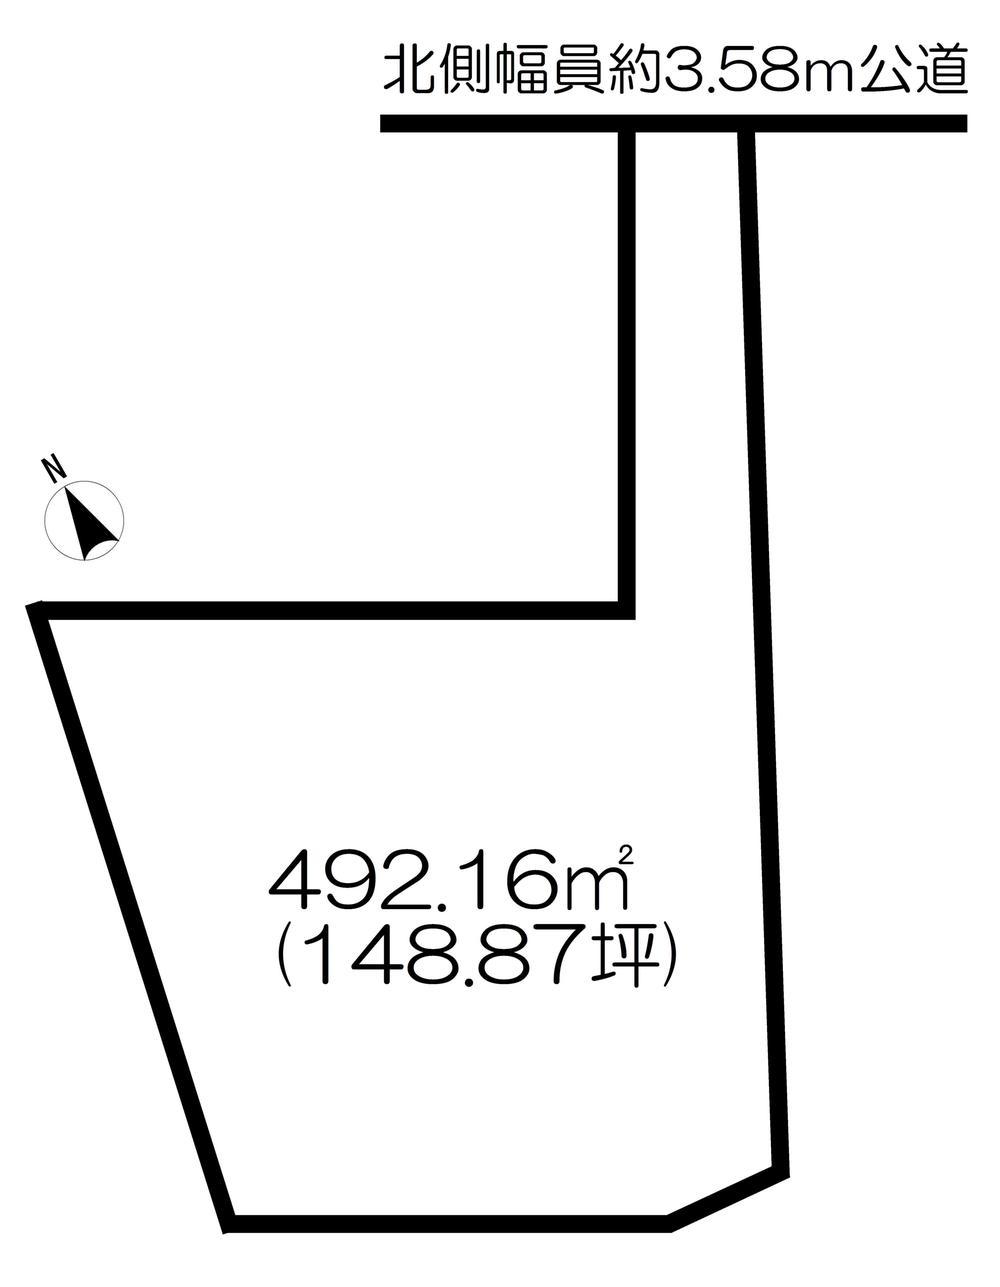 Compartment figure. Land price 23.8 million yen, Land area 492.16 sq m